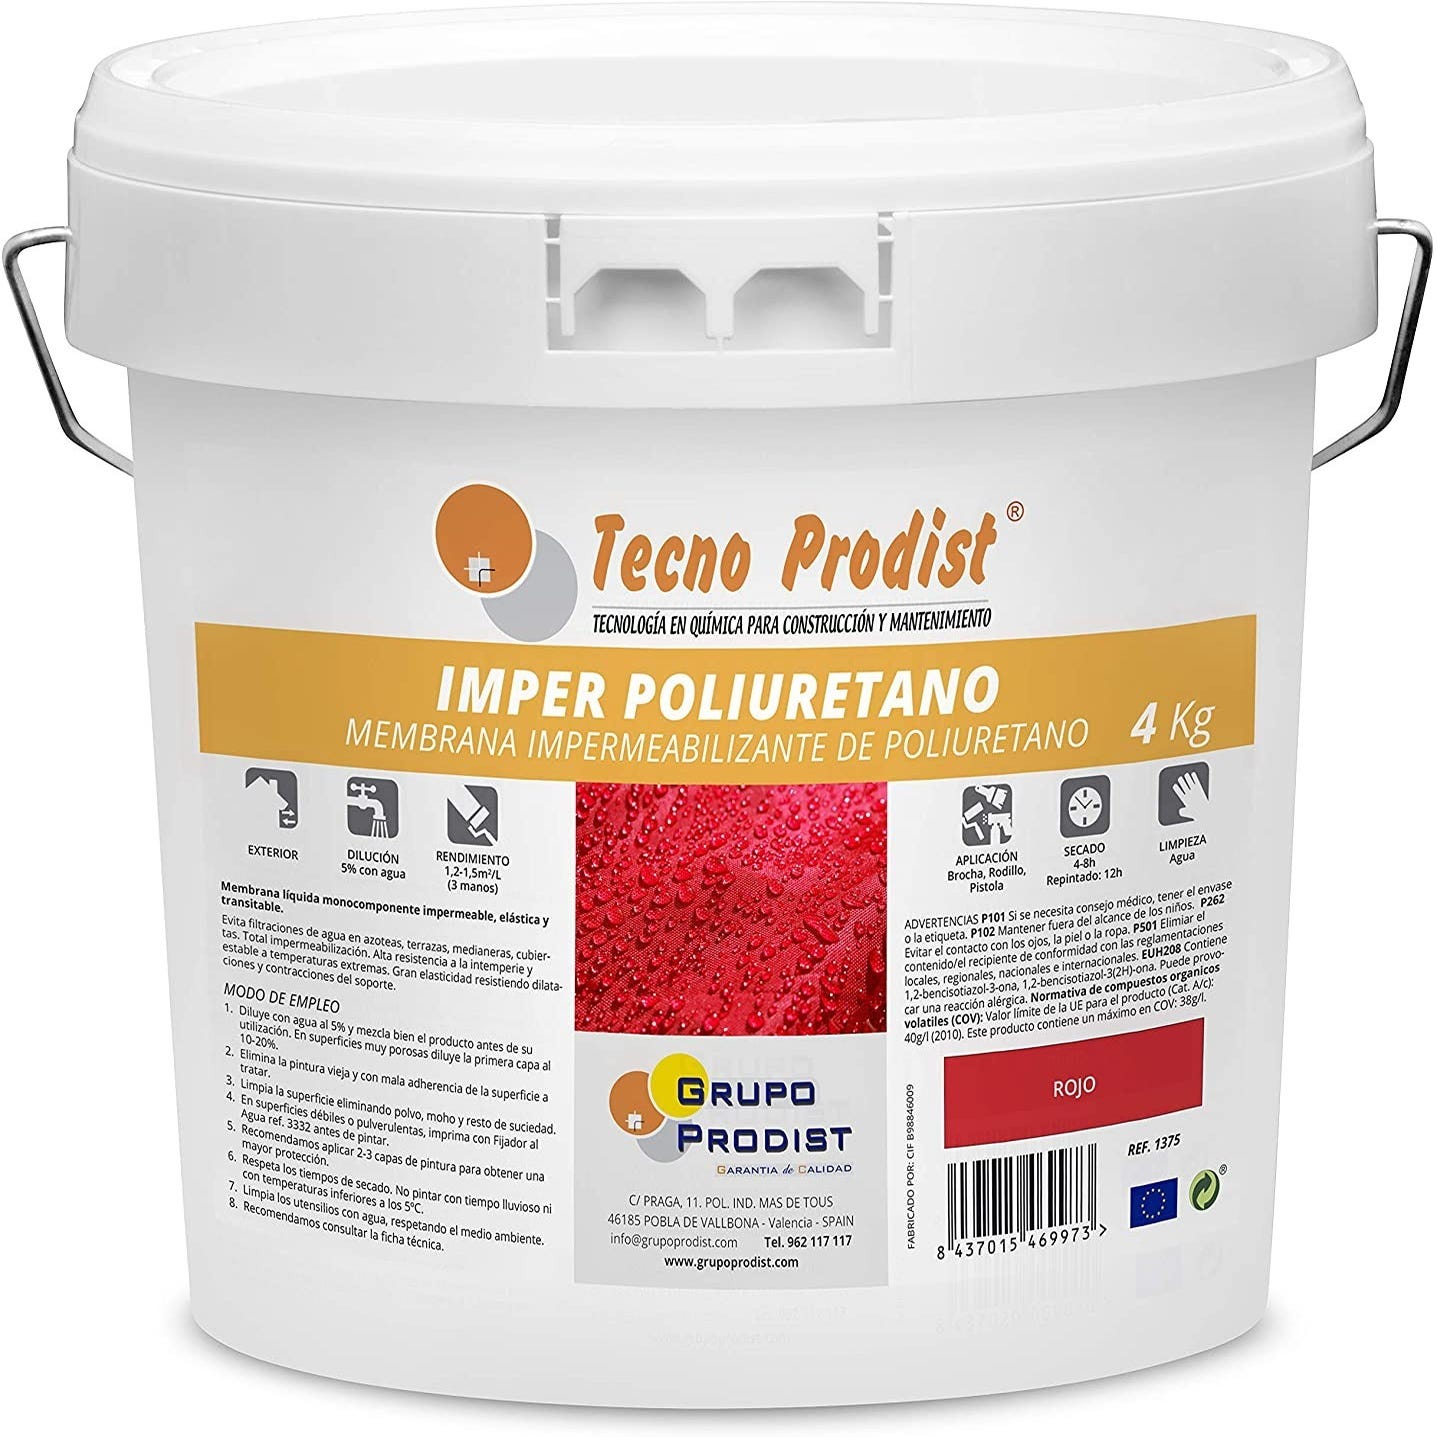 IMPER POLIURETANO de Tecno Prodist - Membrana de Poliuretano  Impermeabilizante para Terrazas, elástica, durabile, resistente - Rojo - 4  Kg